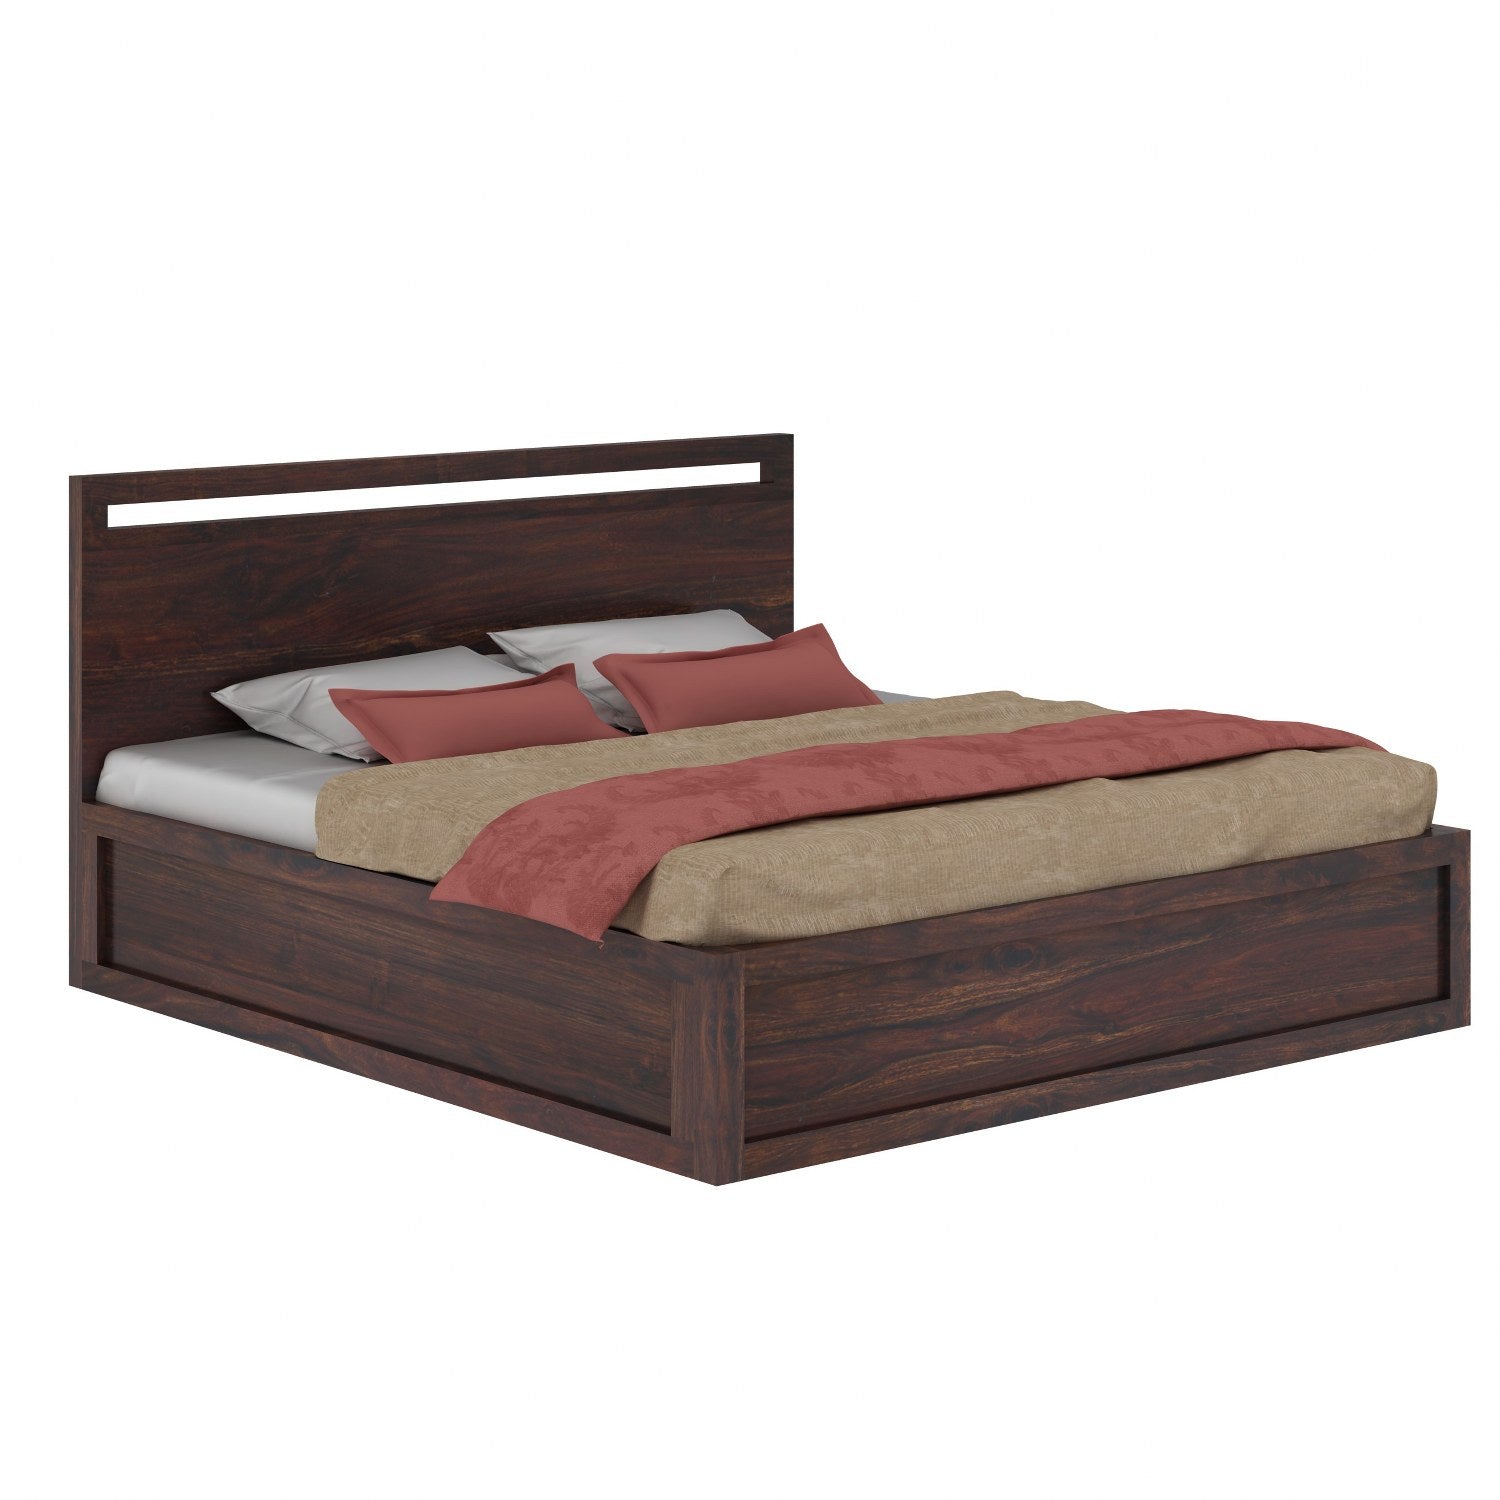 Livinn Solid Sheesham Wood Hydraulic Bed With Box Storage (Queen Size, Walnut Finish)